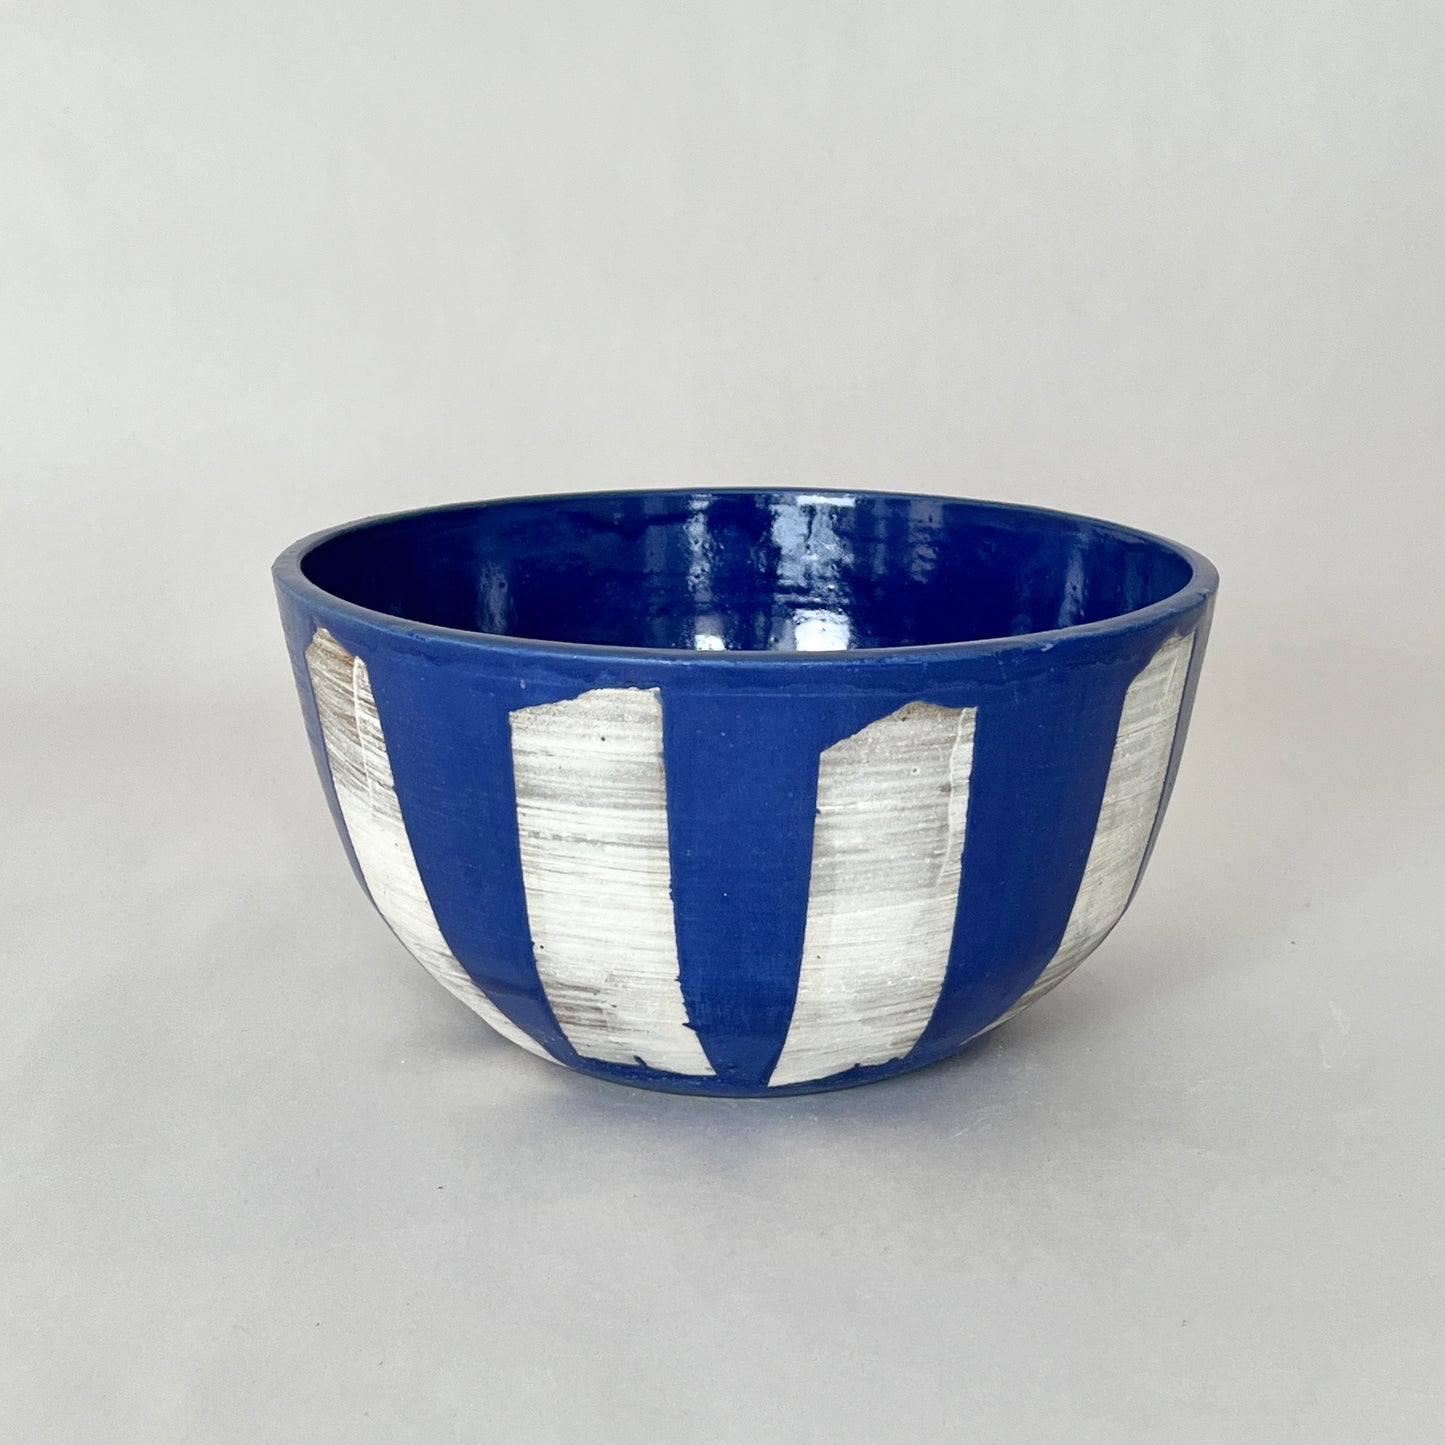 Painter Tape Bowl, Medium Blue/White